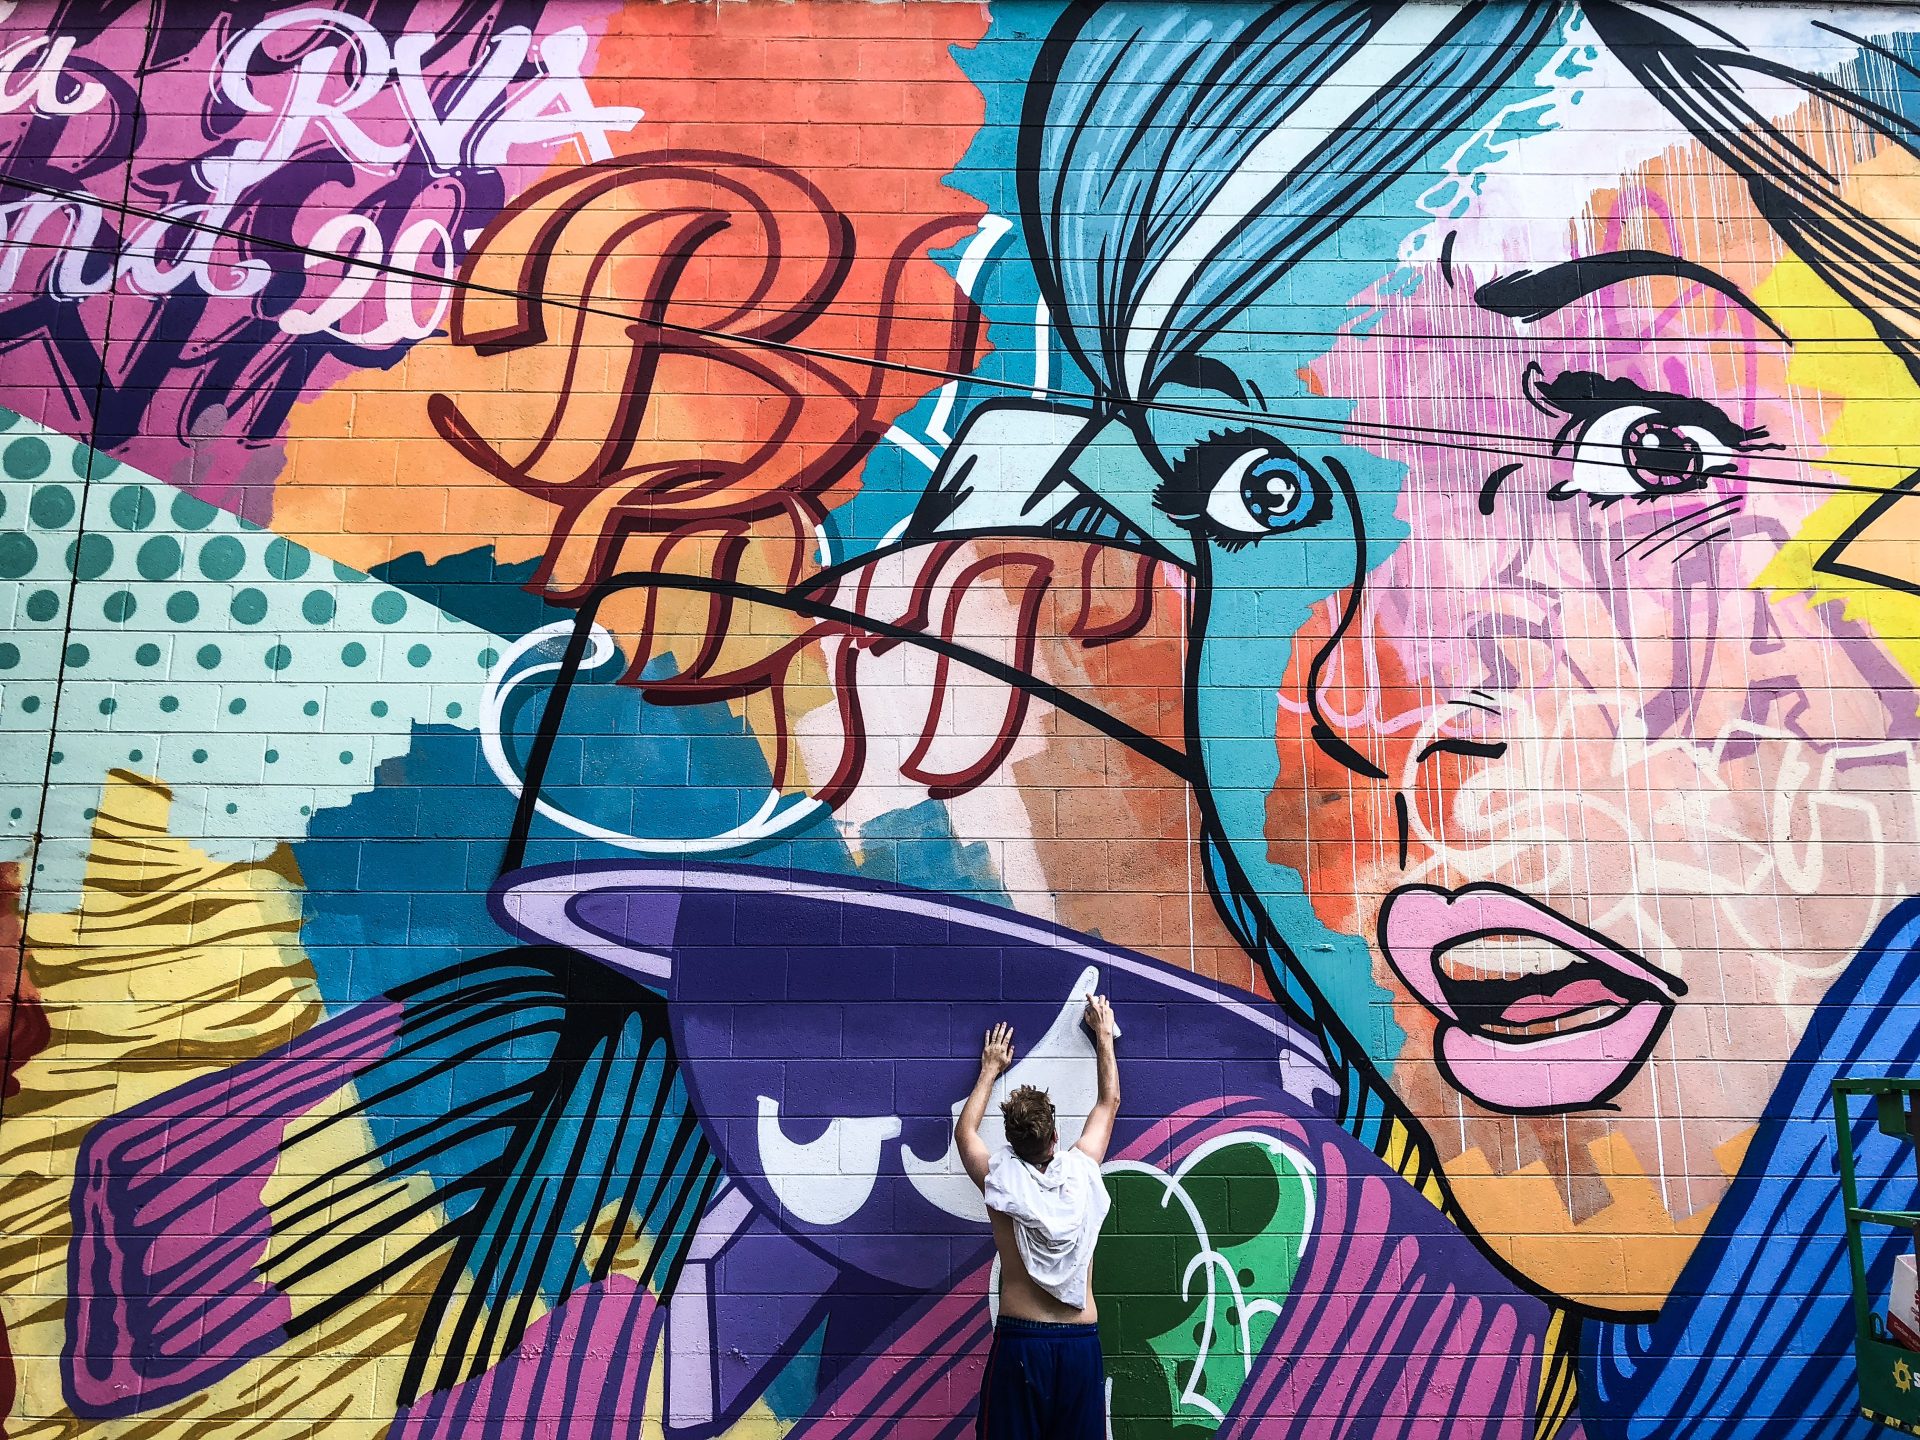 BustArt’s Pop-Graffiti Explosion in Richmond